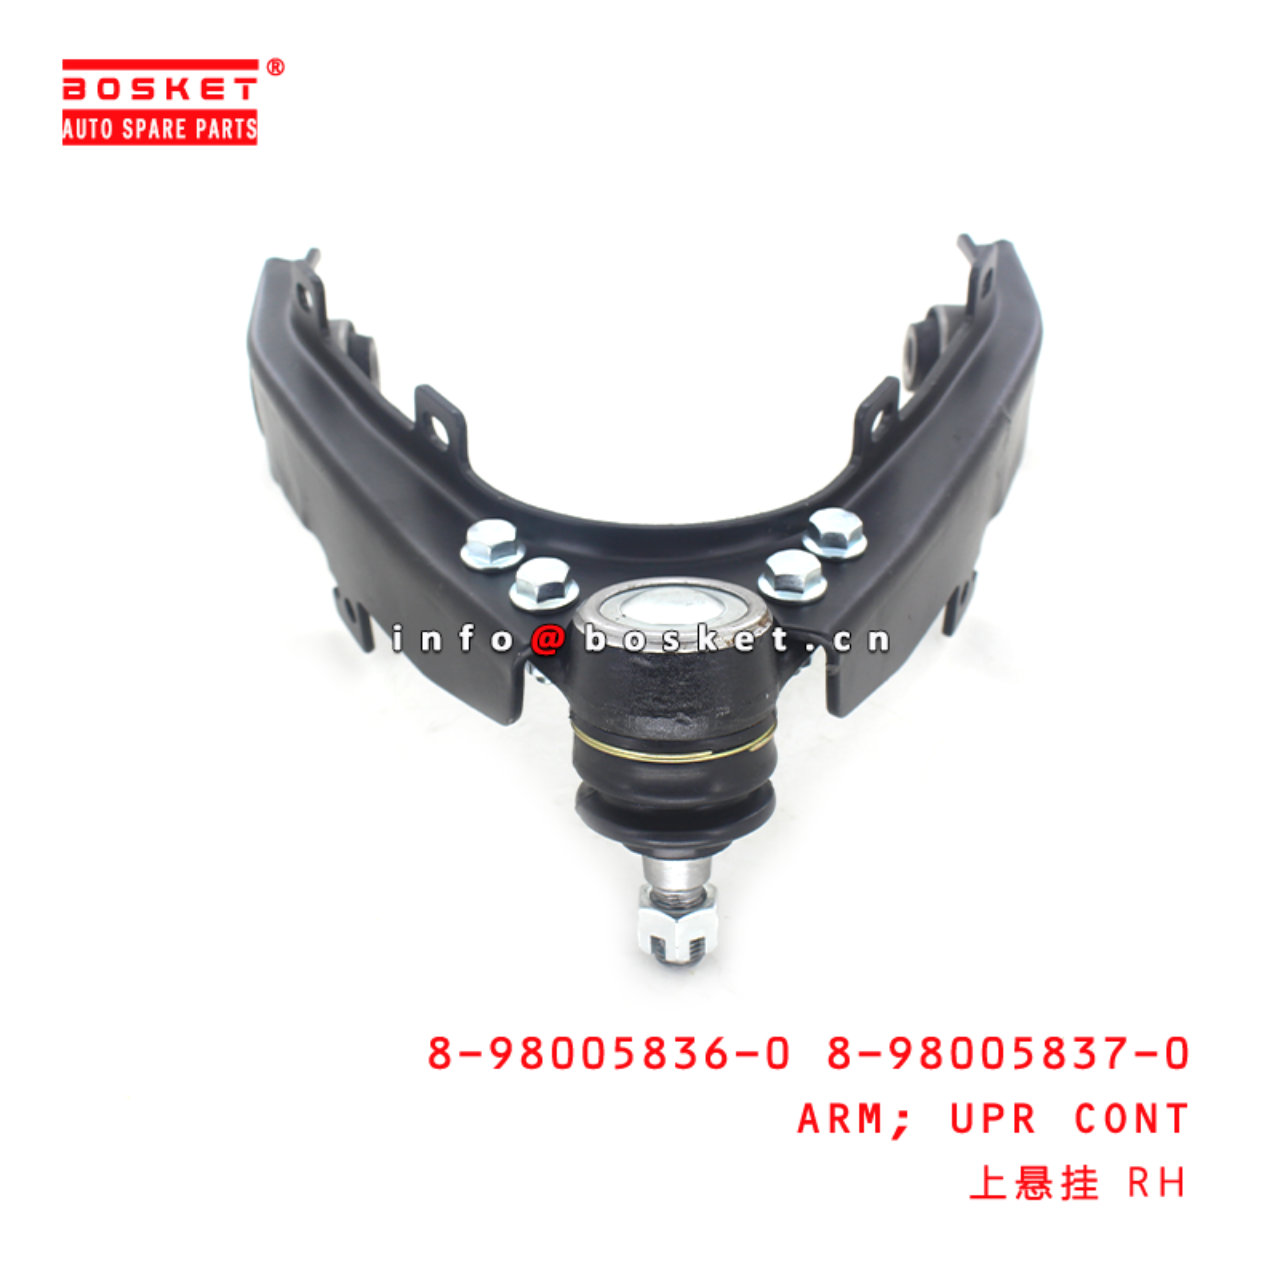 8-98005836-0 8-98005837-0 Upper Control Arm 8980058360 8980058370 Suitable for ISUZU D-MAX 4X2